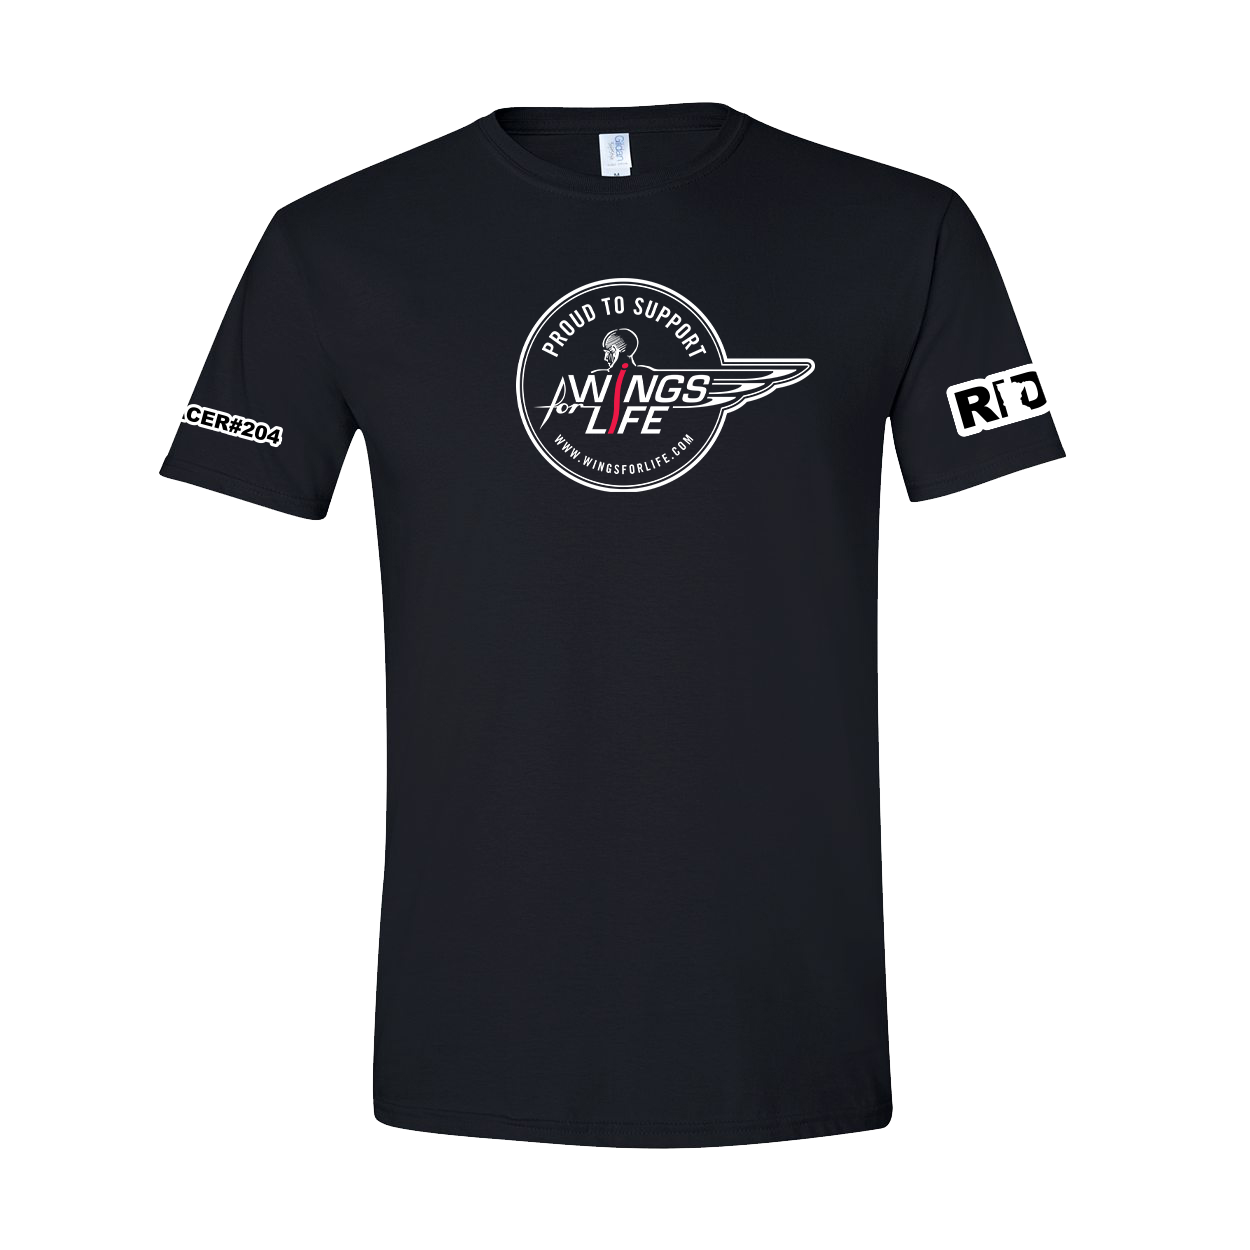 Raycer 204 Classic Wings For Life X Ride Minnesota T-Shirt Black